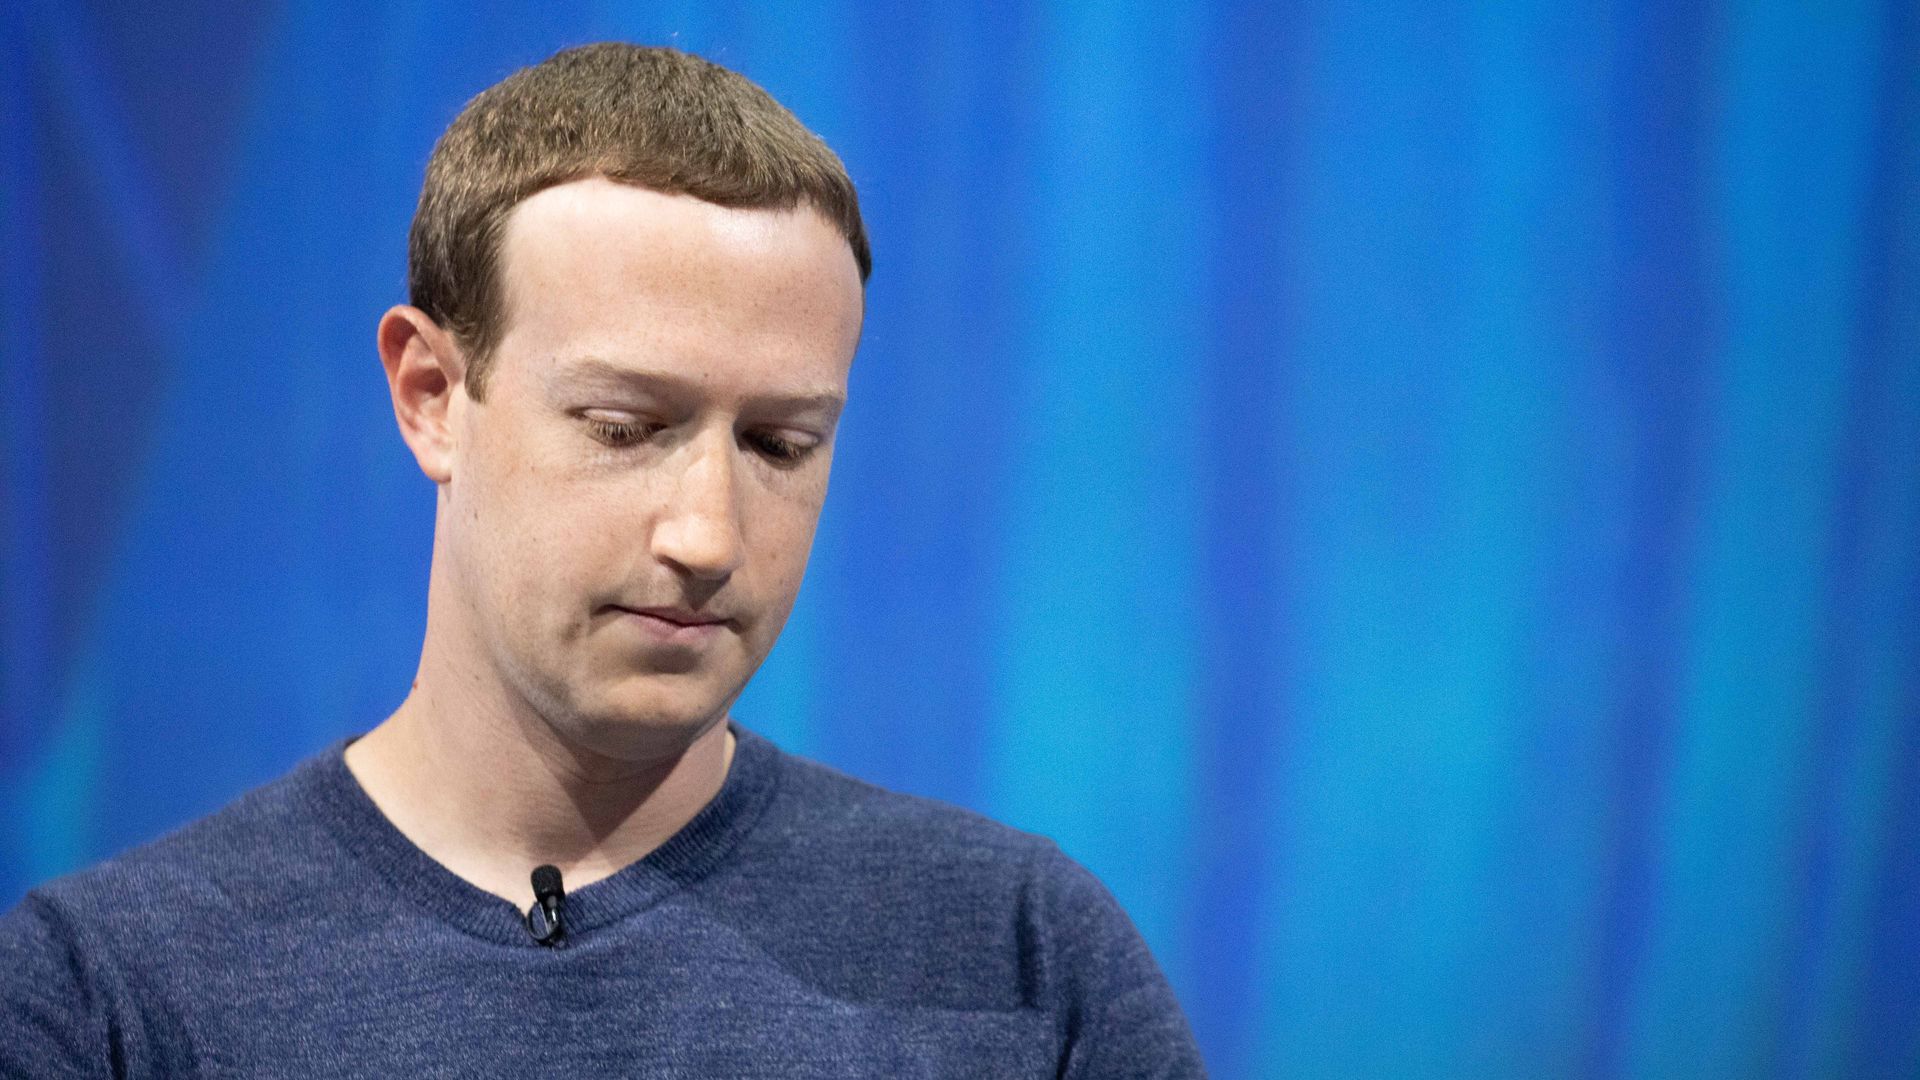 Mark Zuckerberg, eyes cast downward